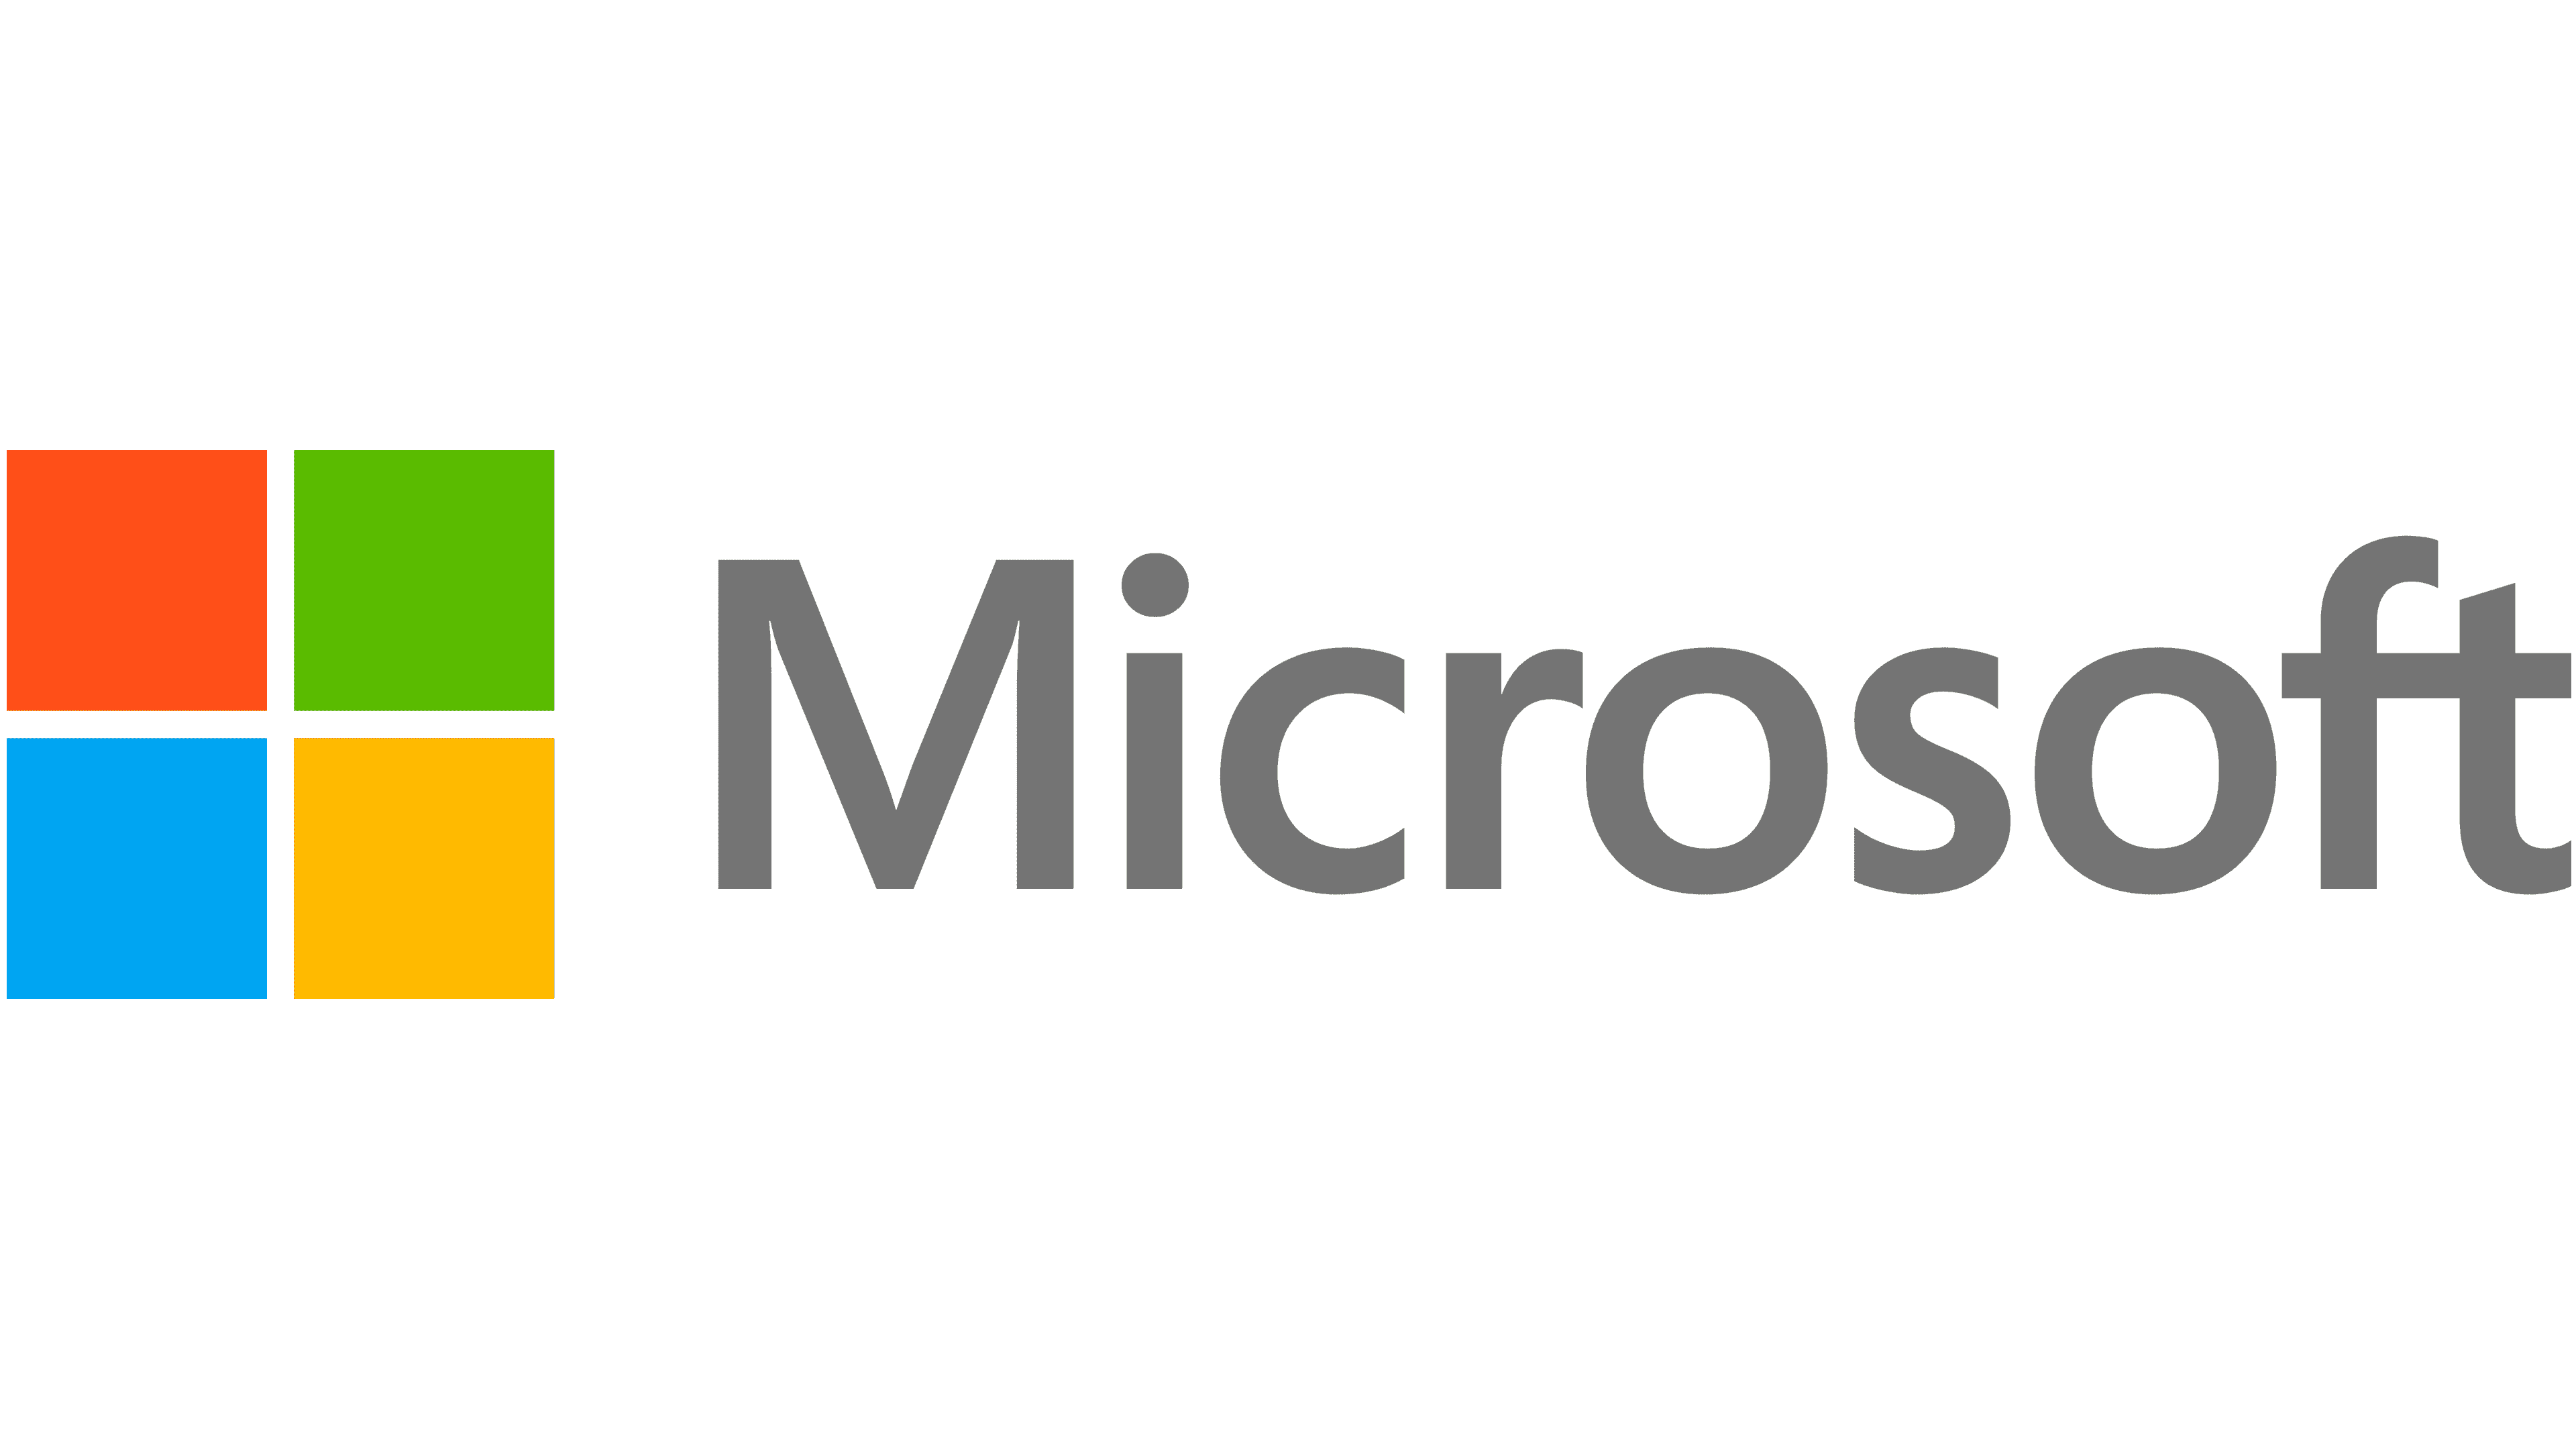 Microsoft programs